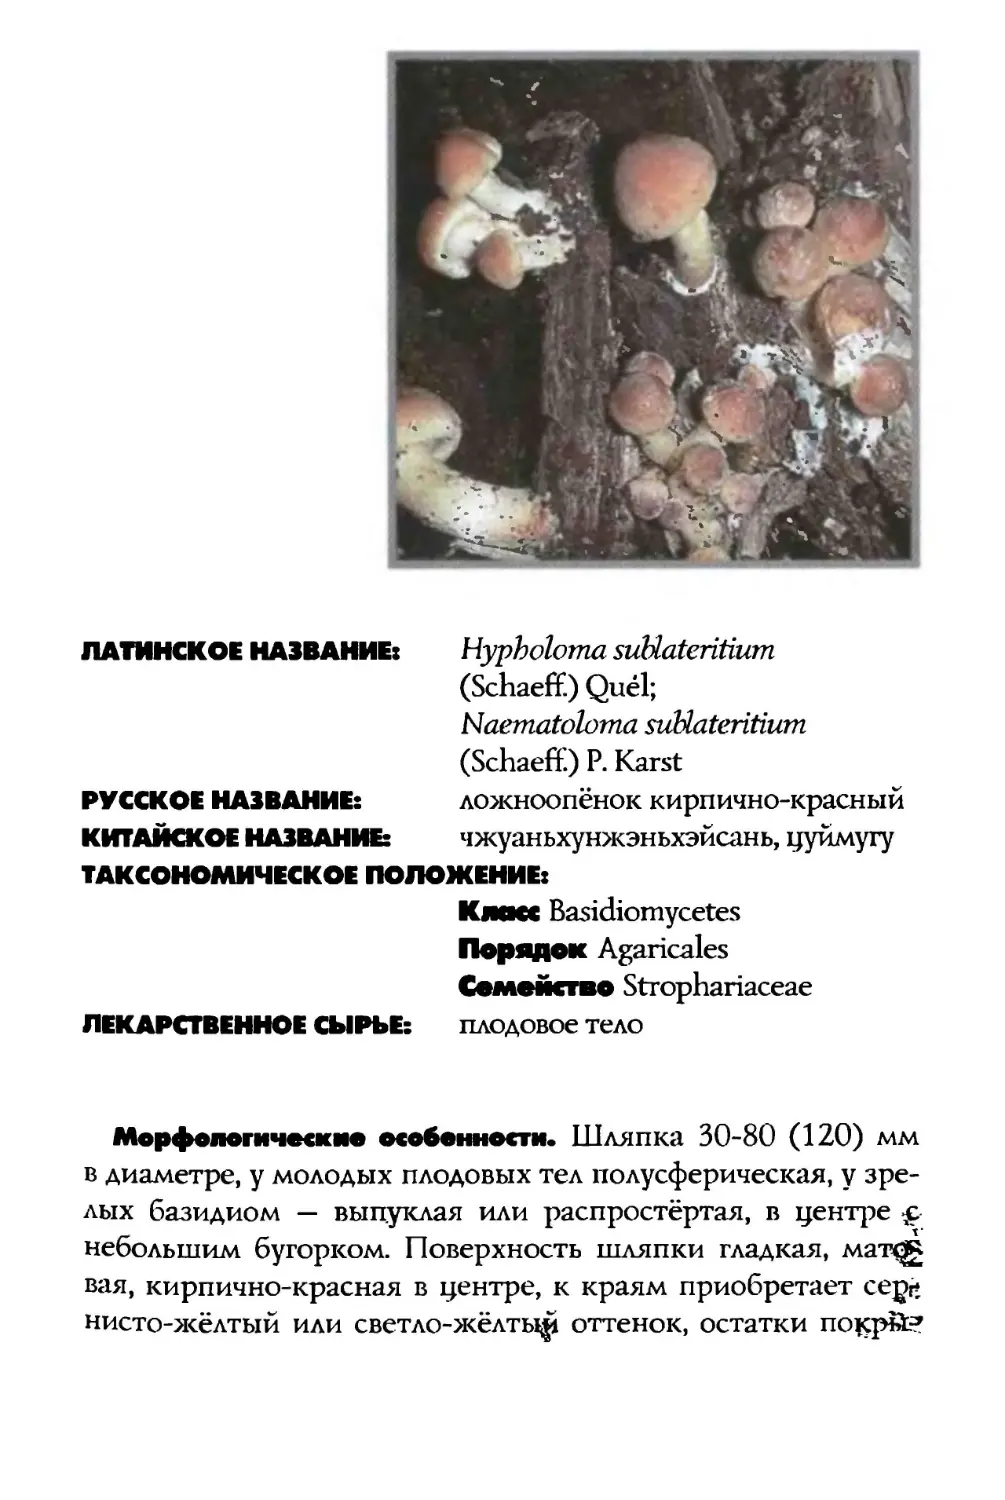 Hypholomo subloteritium